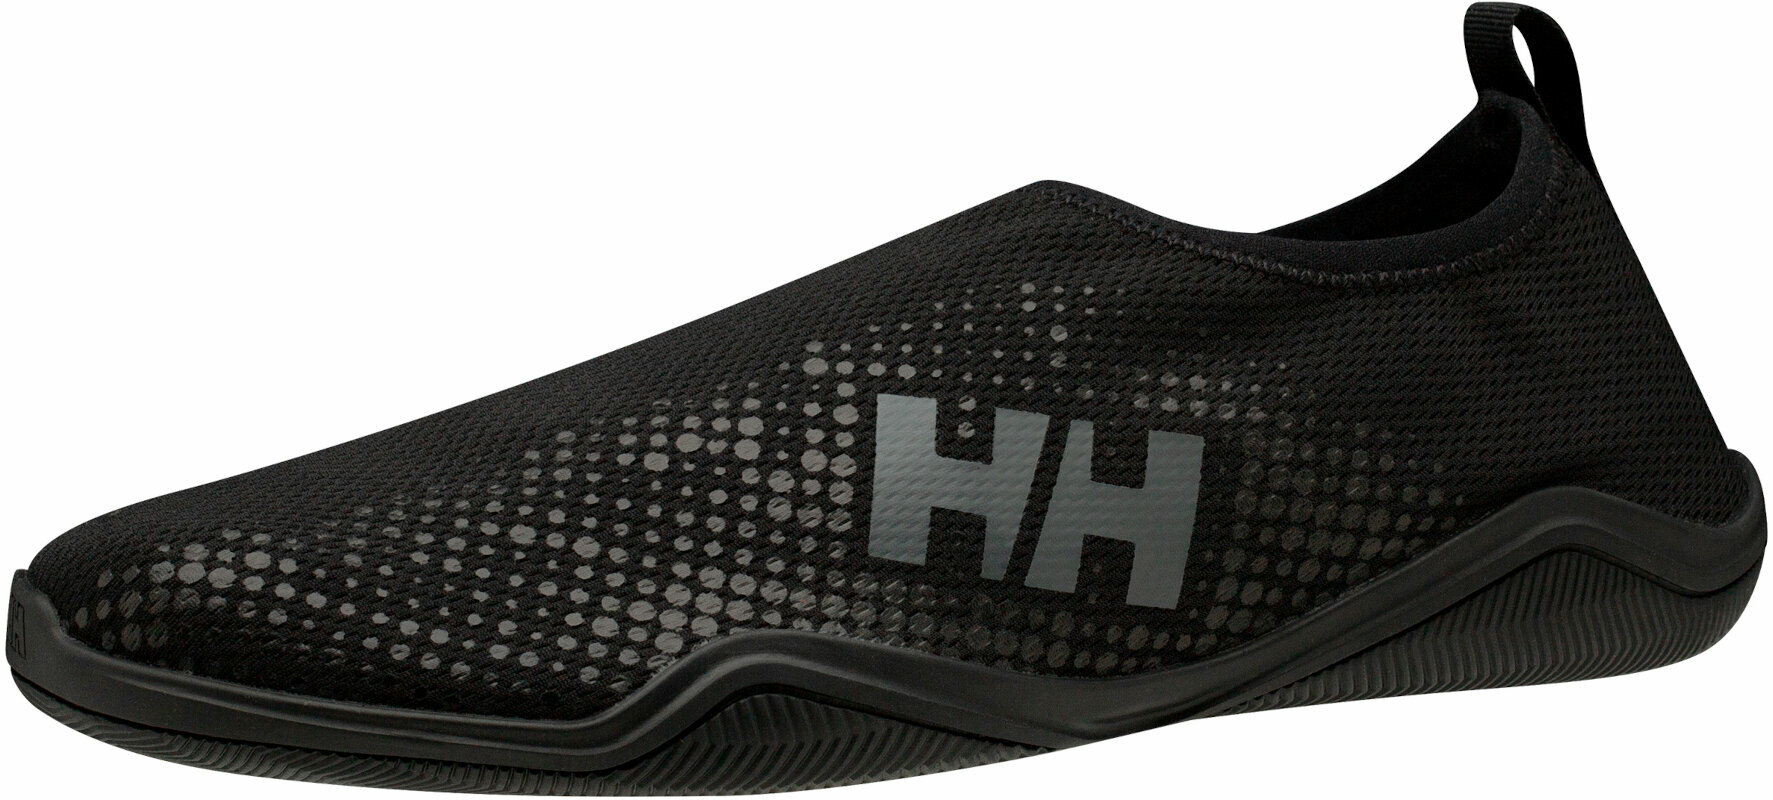 Herrenschuhe Helly Hansen Men's Crest Watermoc Black/Charcoal 40,5